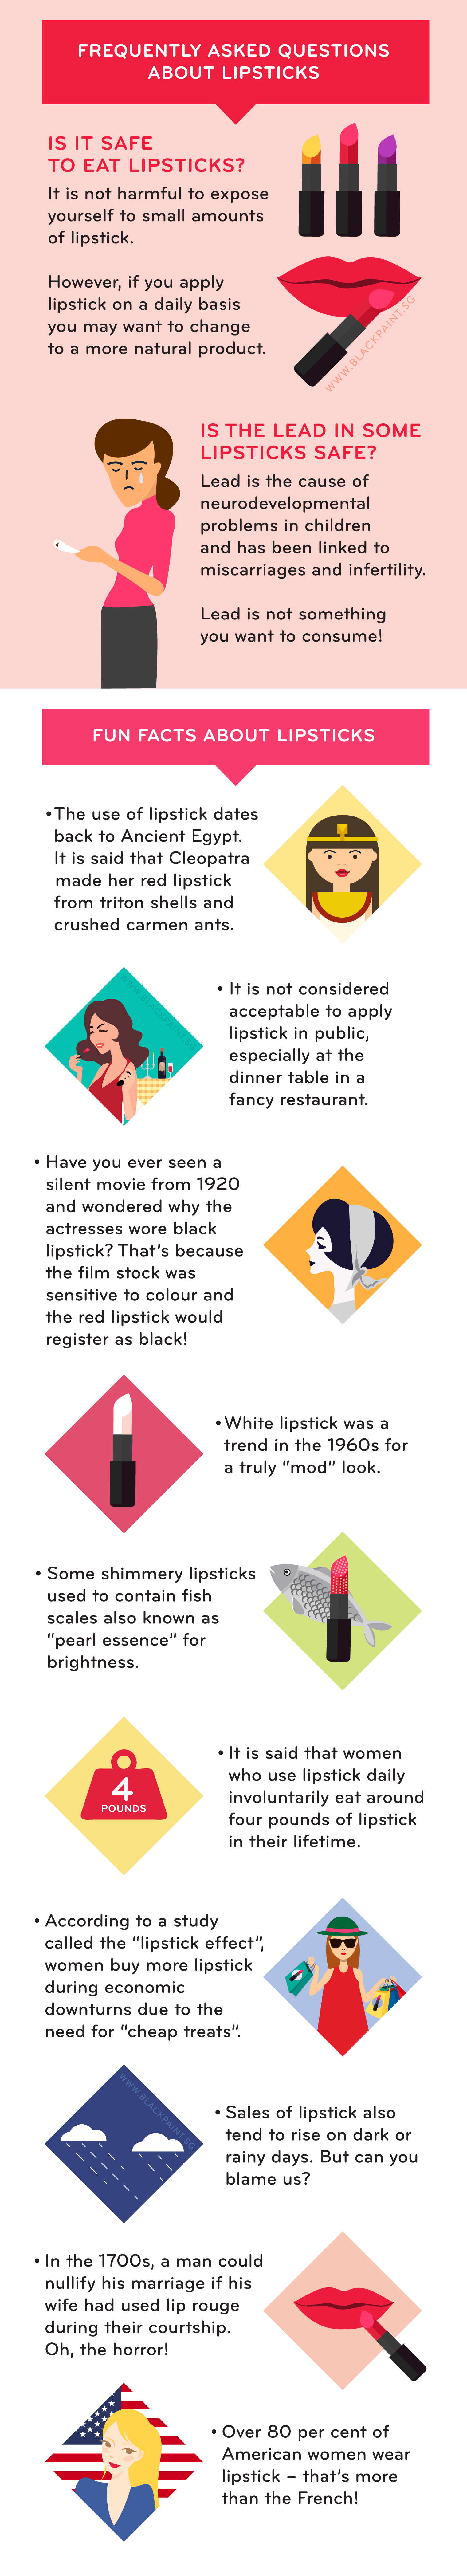 Fun Facts About Lipsticks